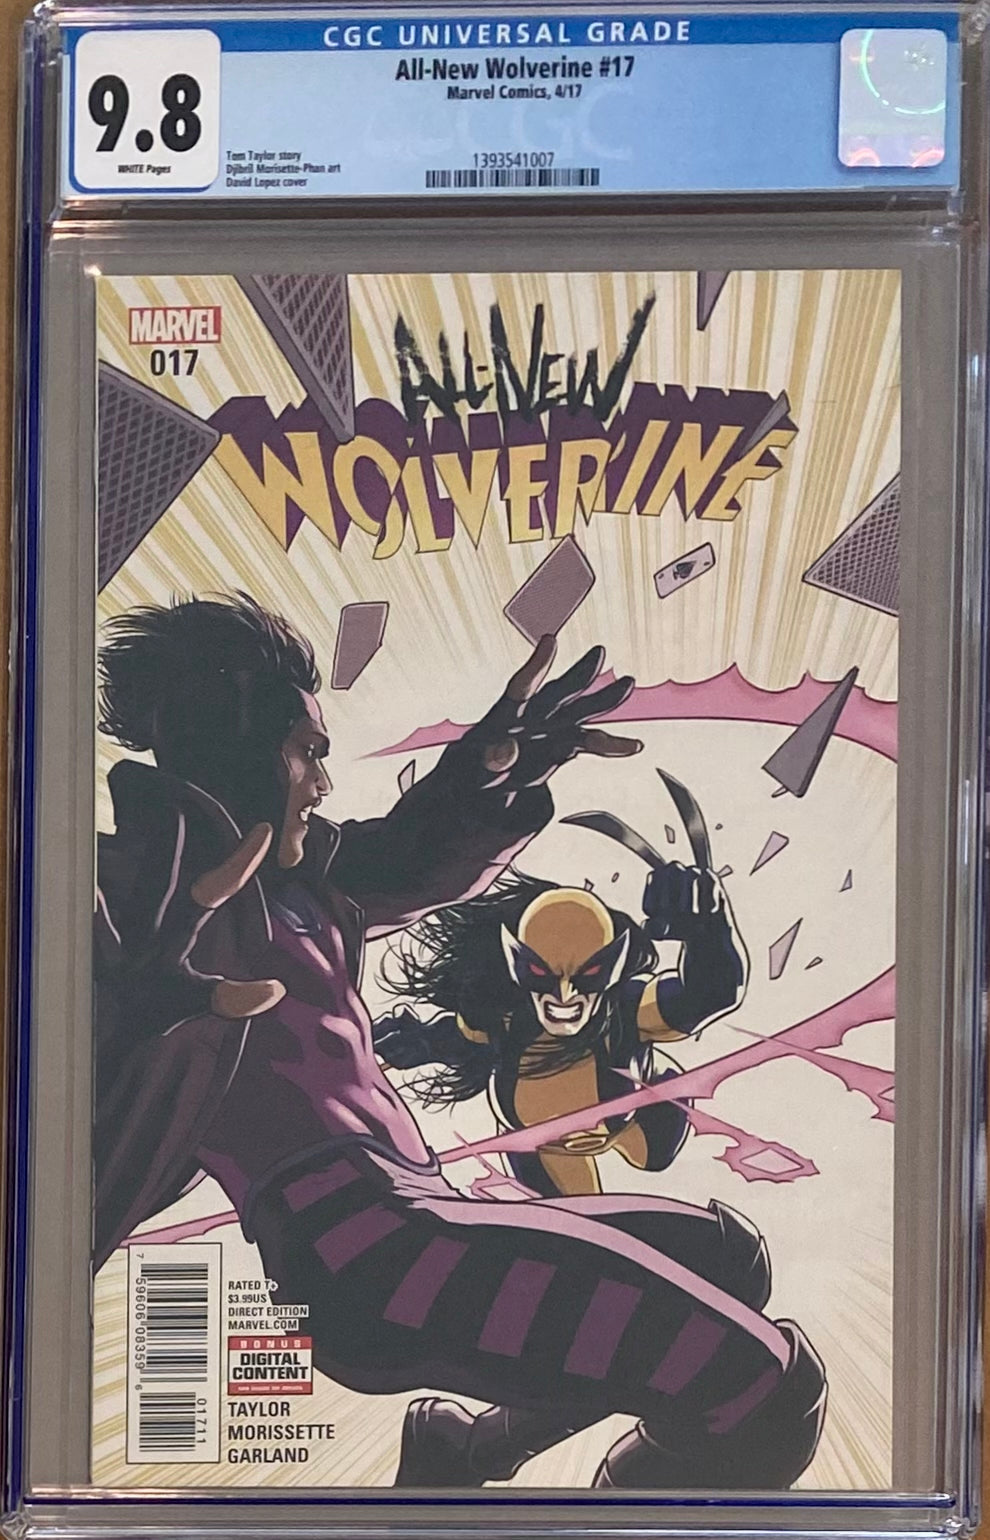 All-New Wolverine #17 CGC 9.8